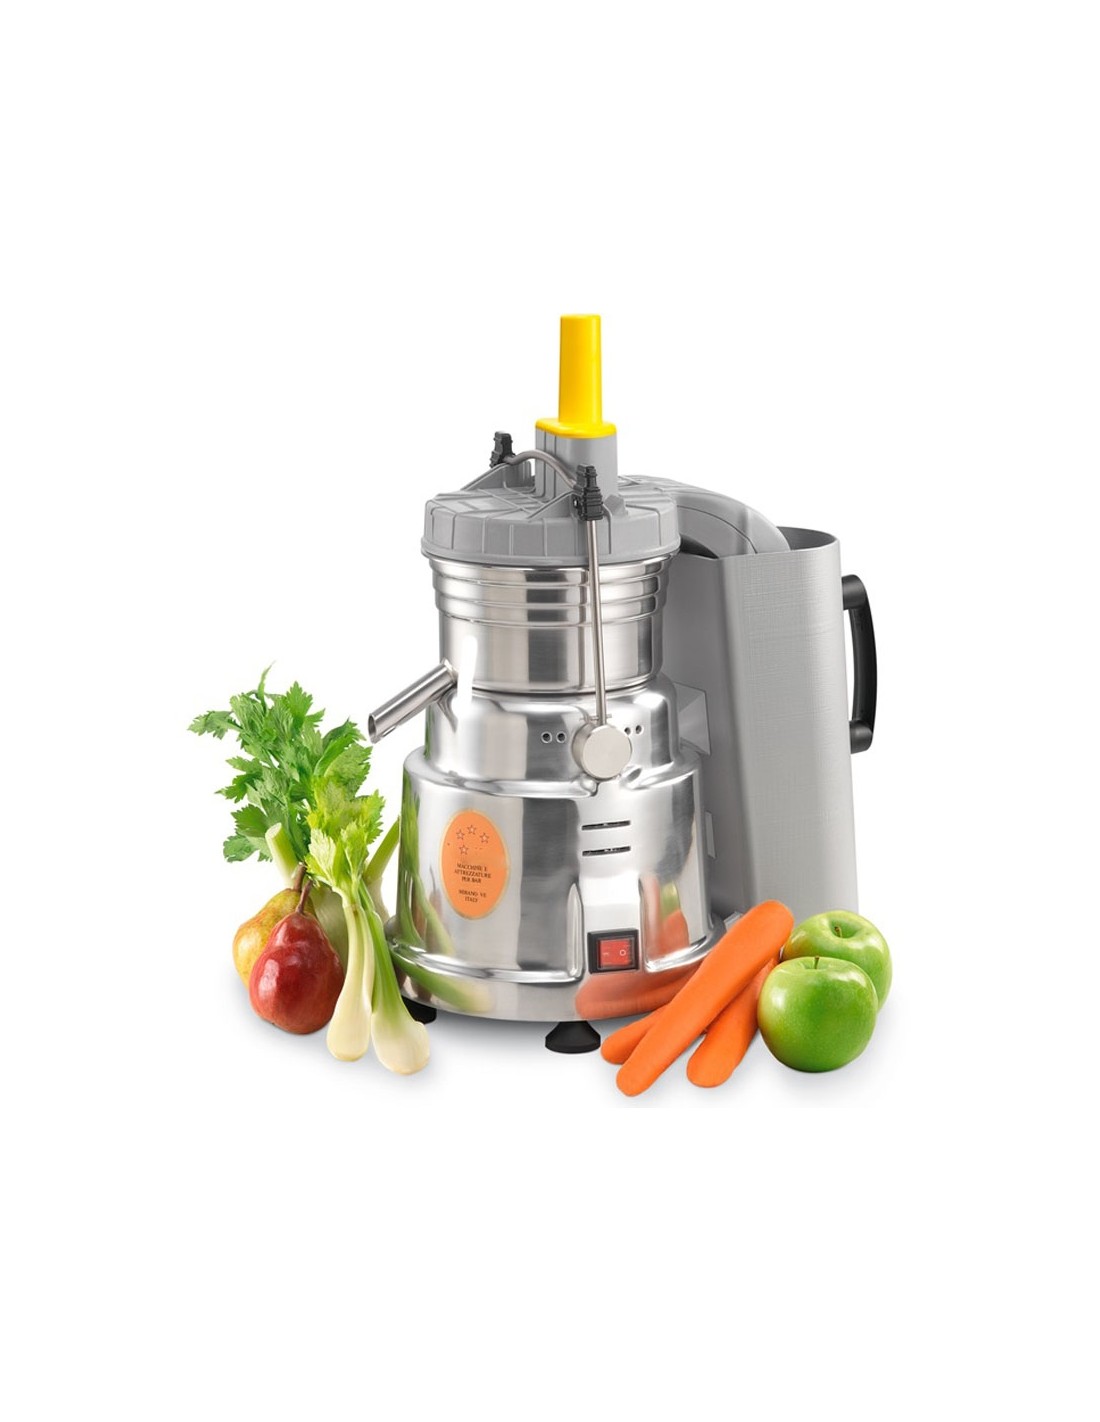 https://www.ristorazione-refrigerazione.it/23633-thickbox_default/centrifuga-de-jugo-autolimpiante-modelo-ce2074-all-para-zumos-frutas-y-verduras-cm-27-x-45-x-55-h.jpg